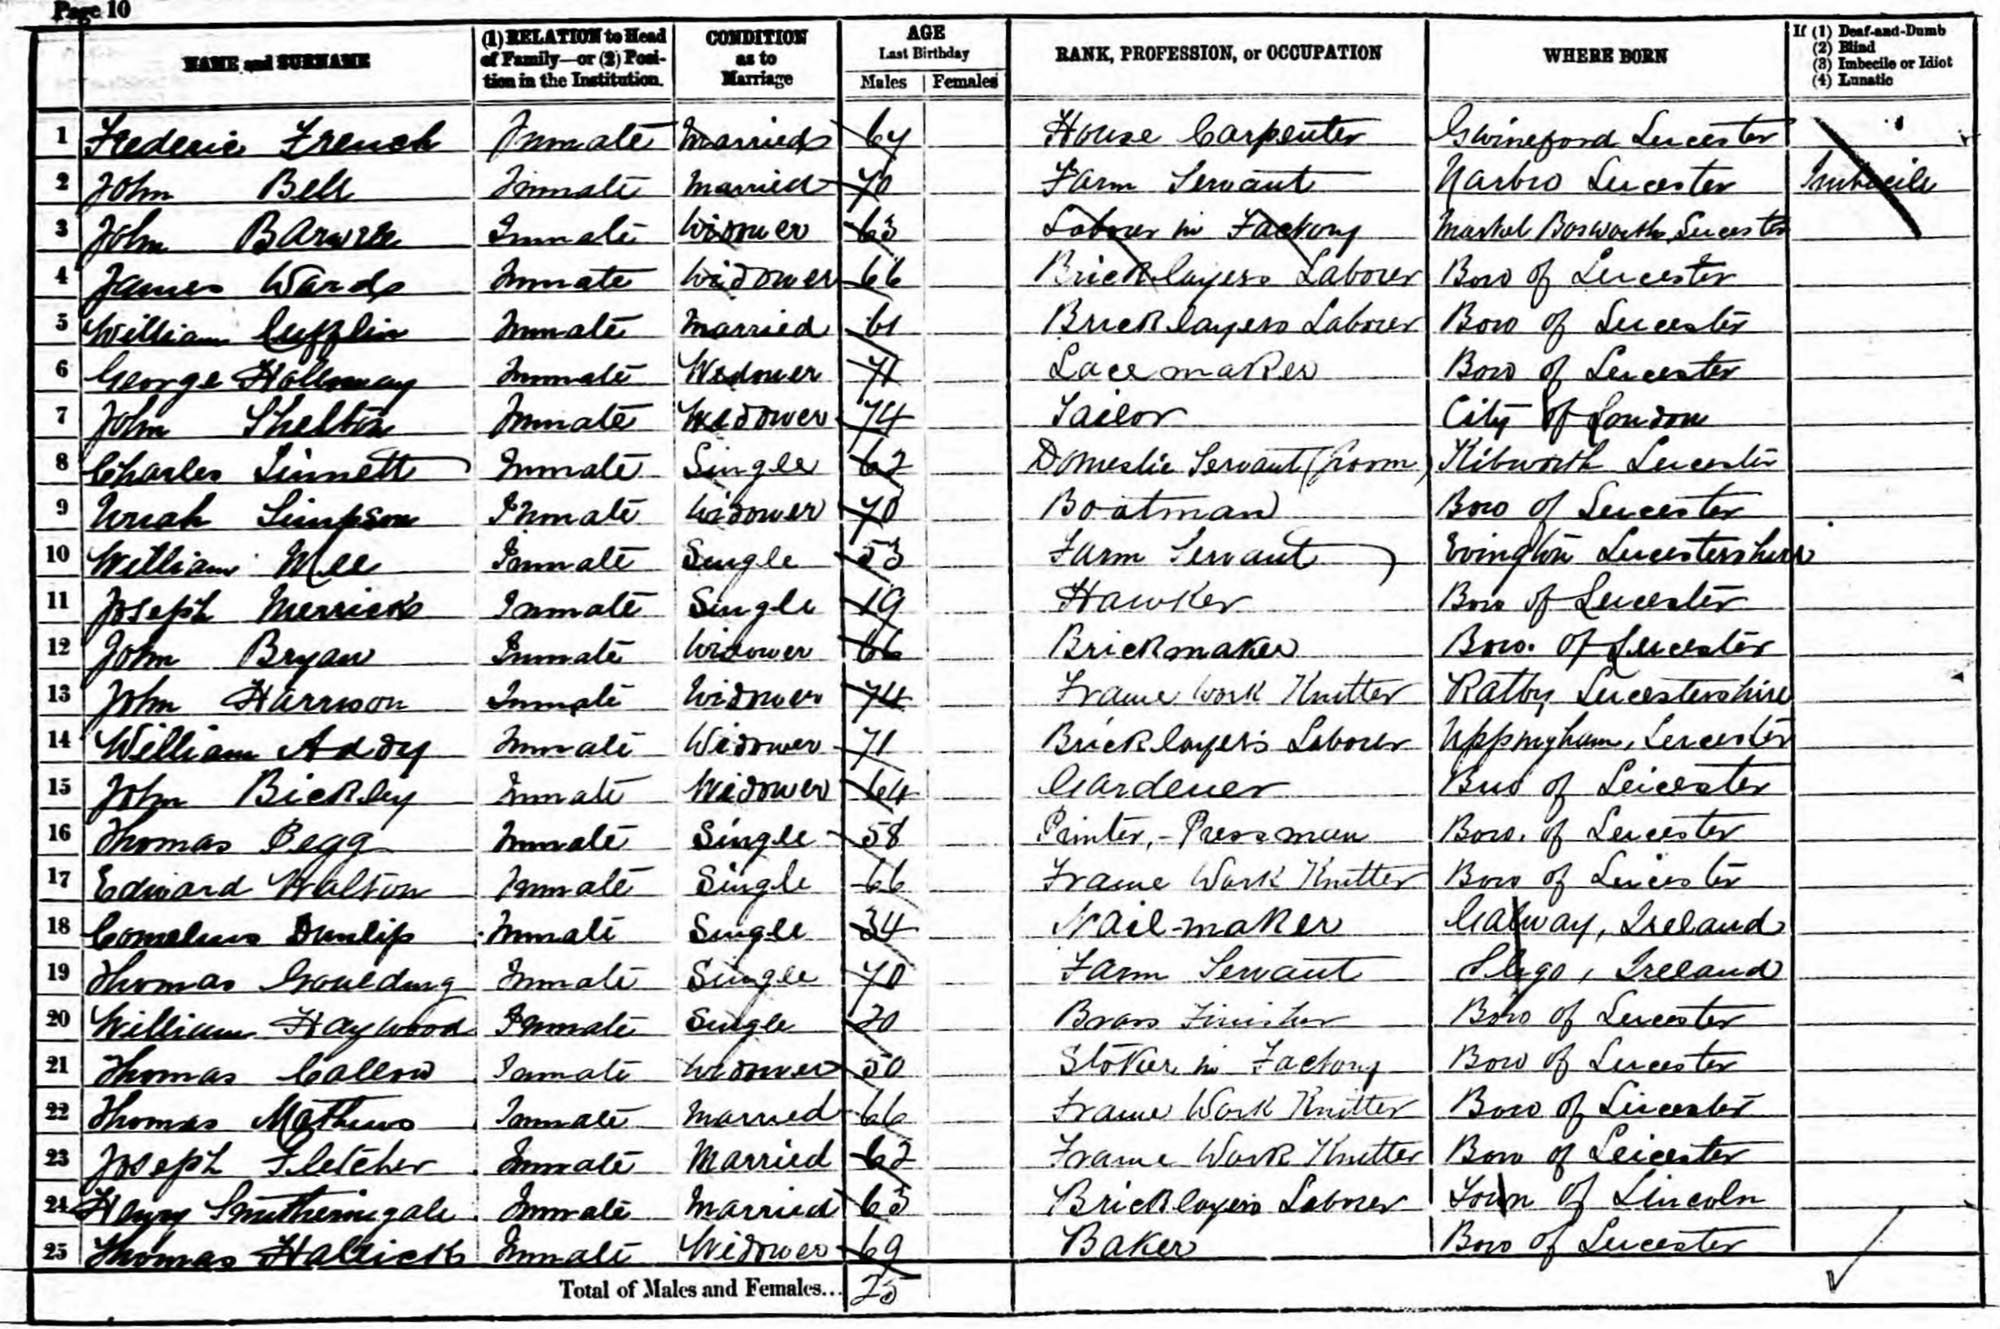 1881 Census listing of Joseph Merrick (Row 11) - 